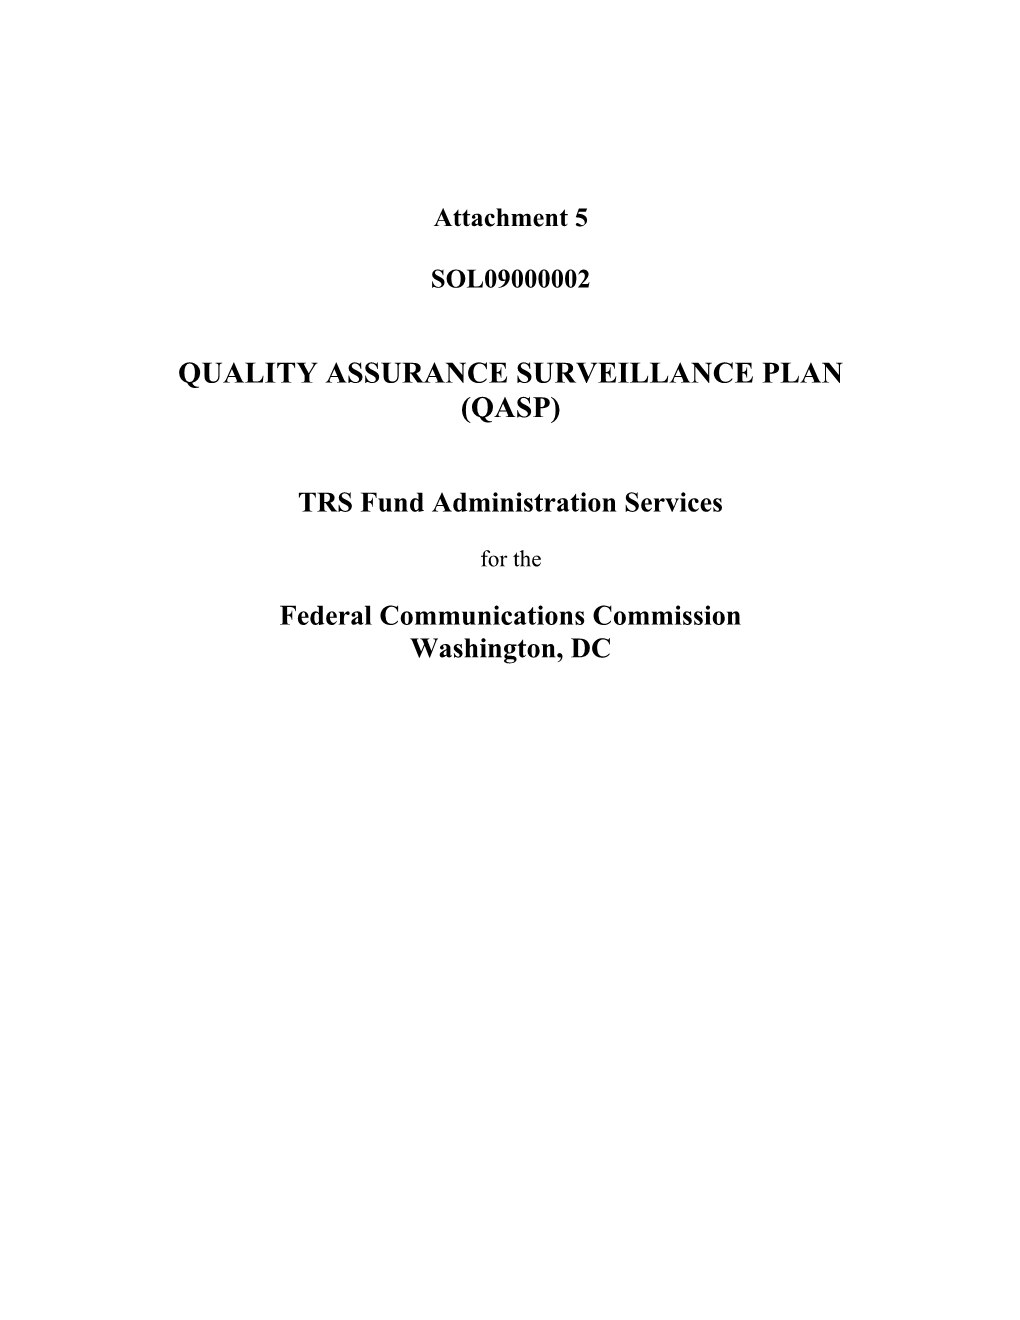 Quality Assurance Surveillance Plan (Qasp)